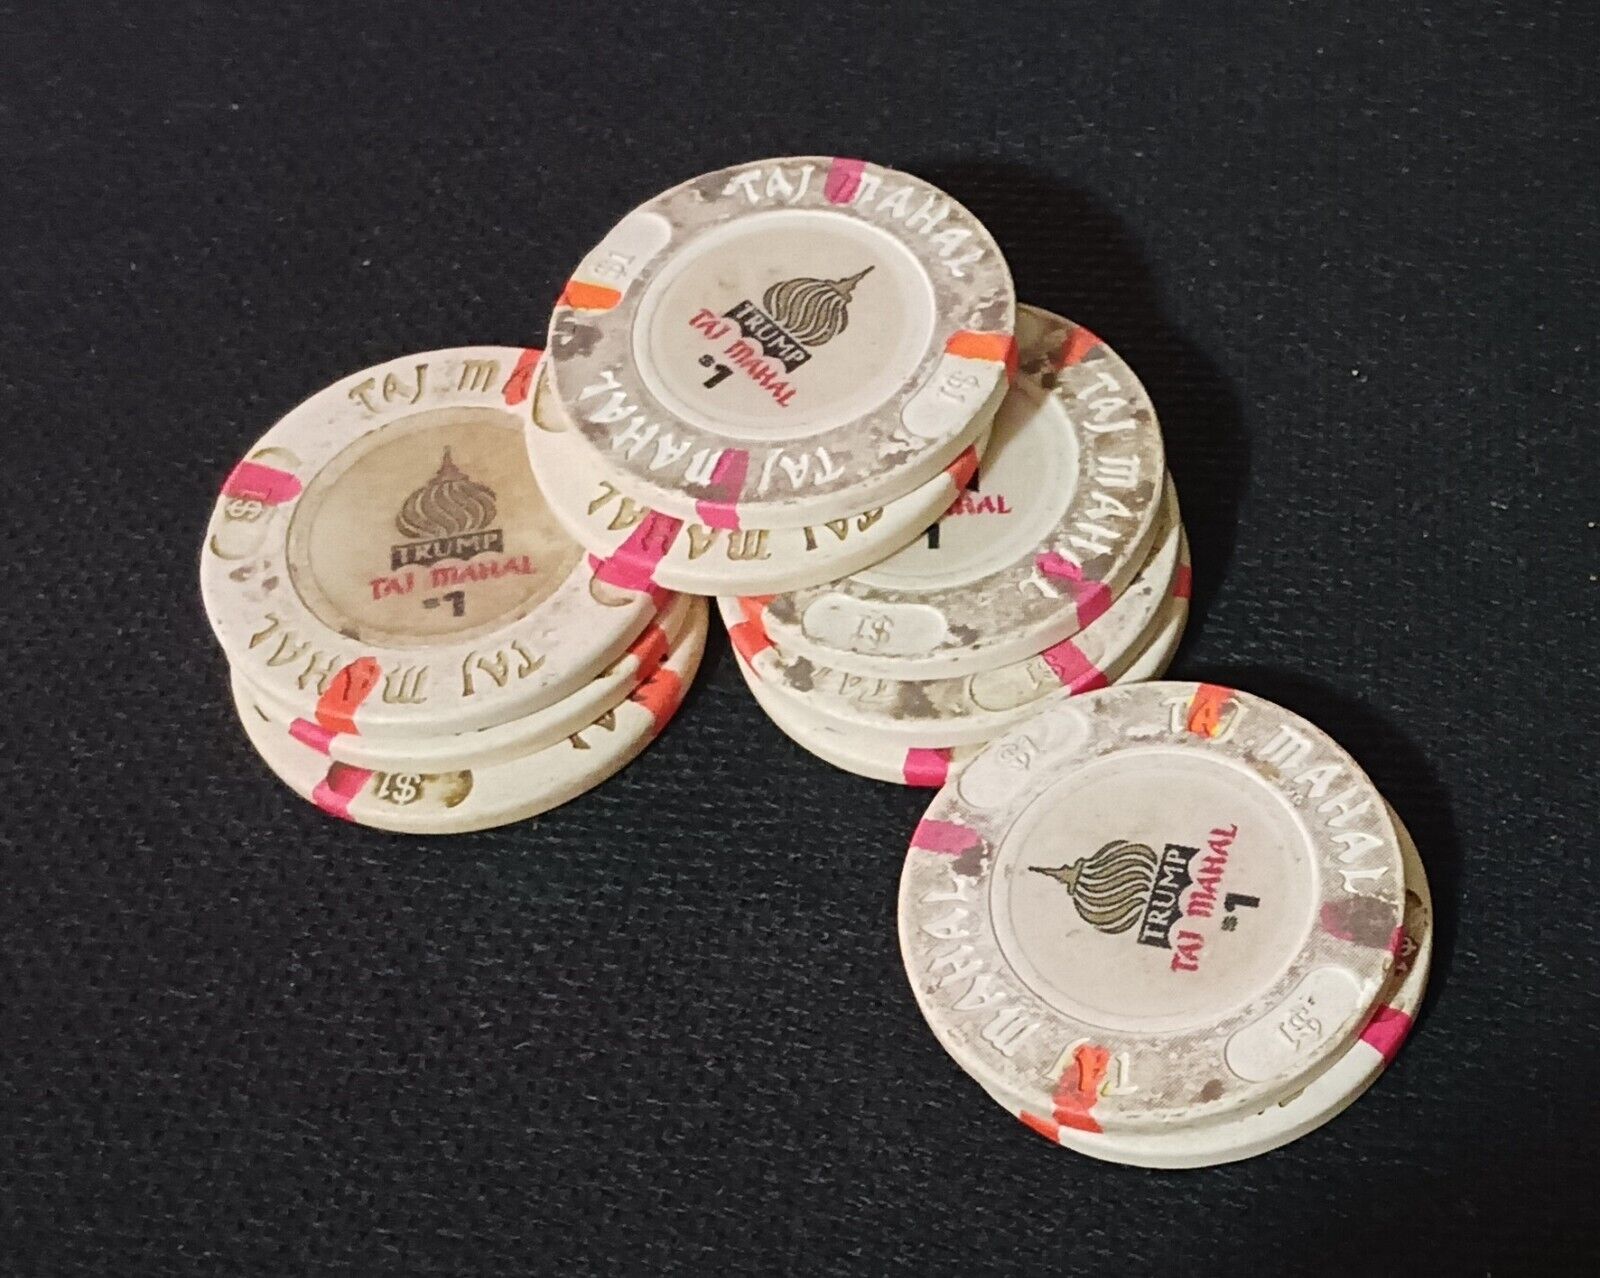 10 $1 Trump Taj Mahal Poker Chips